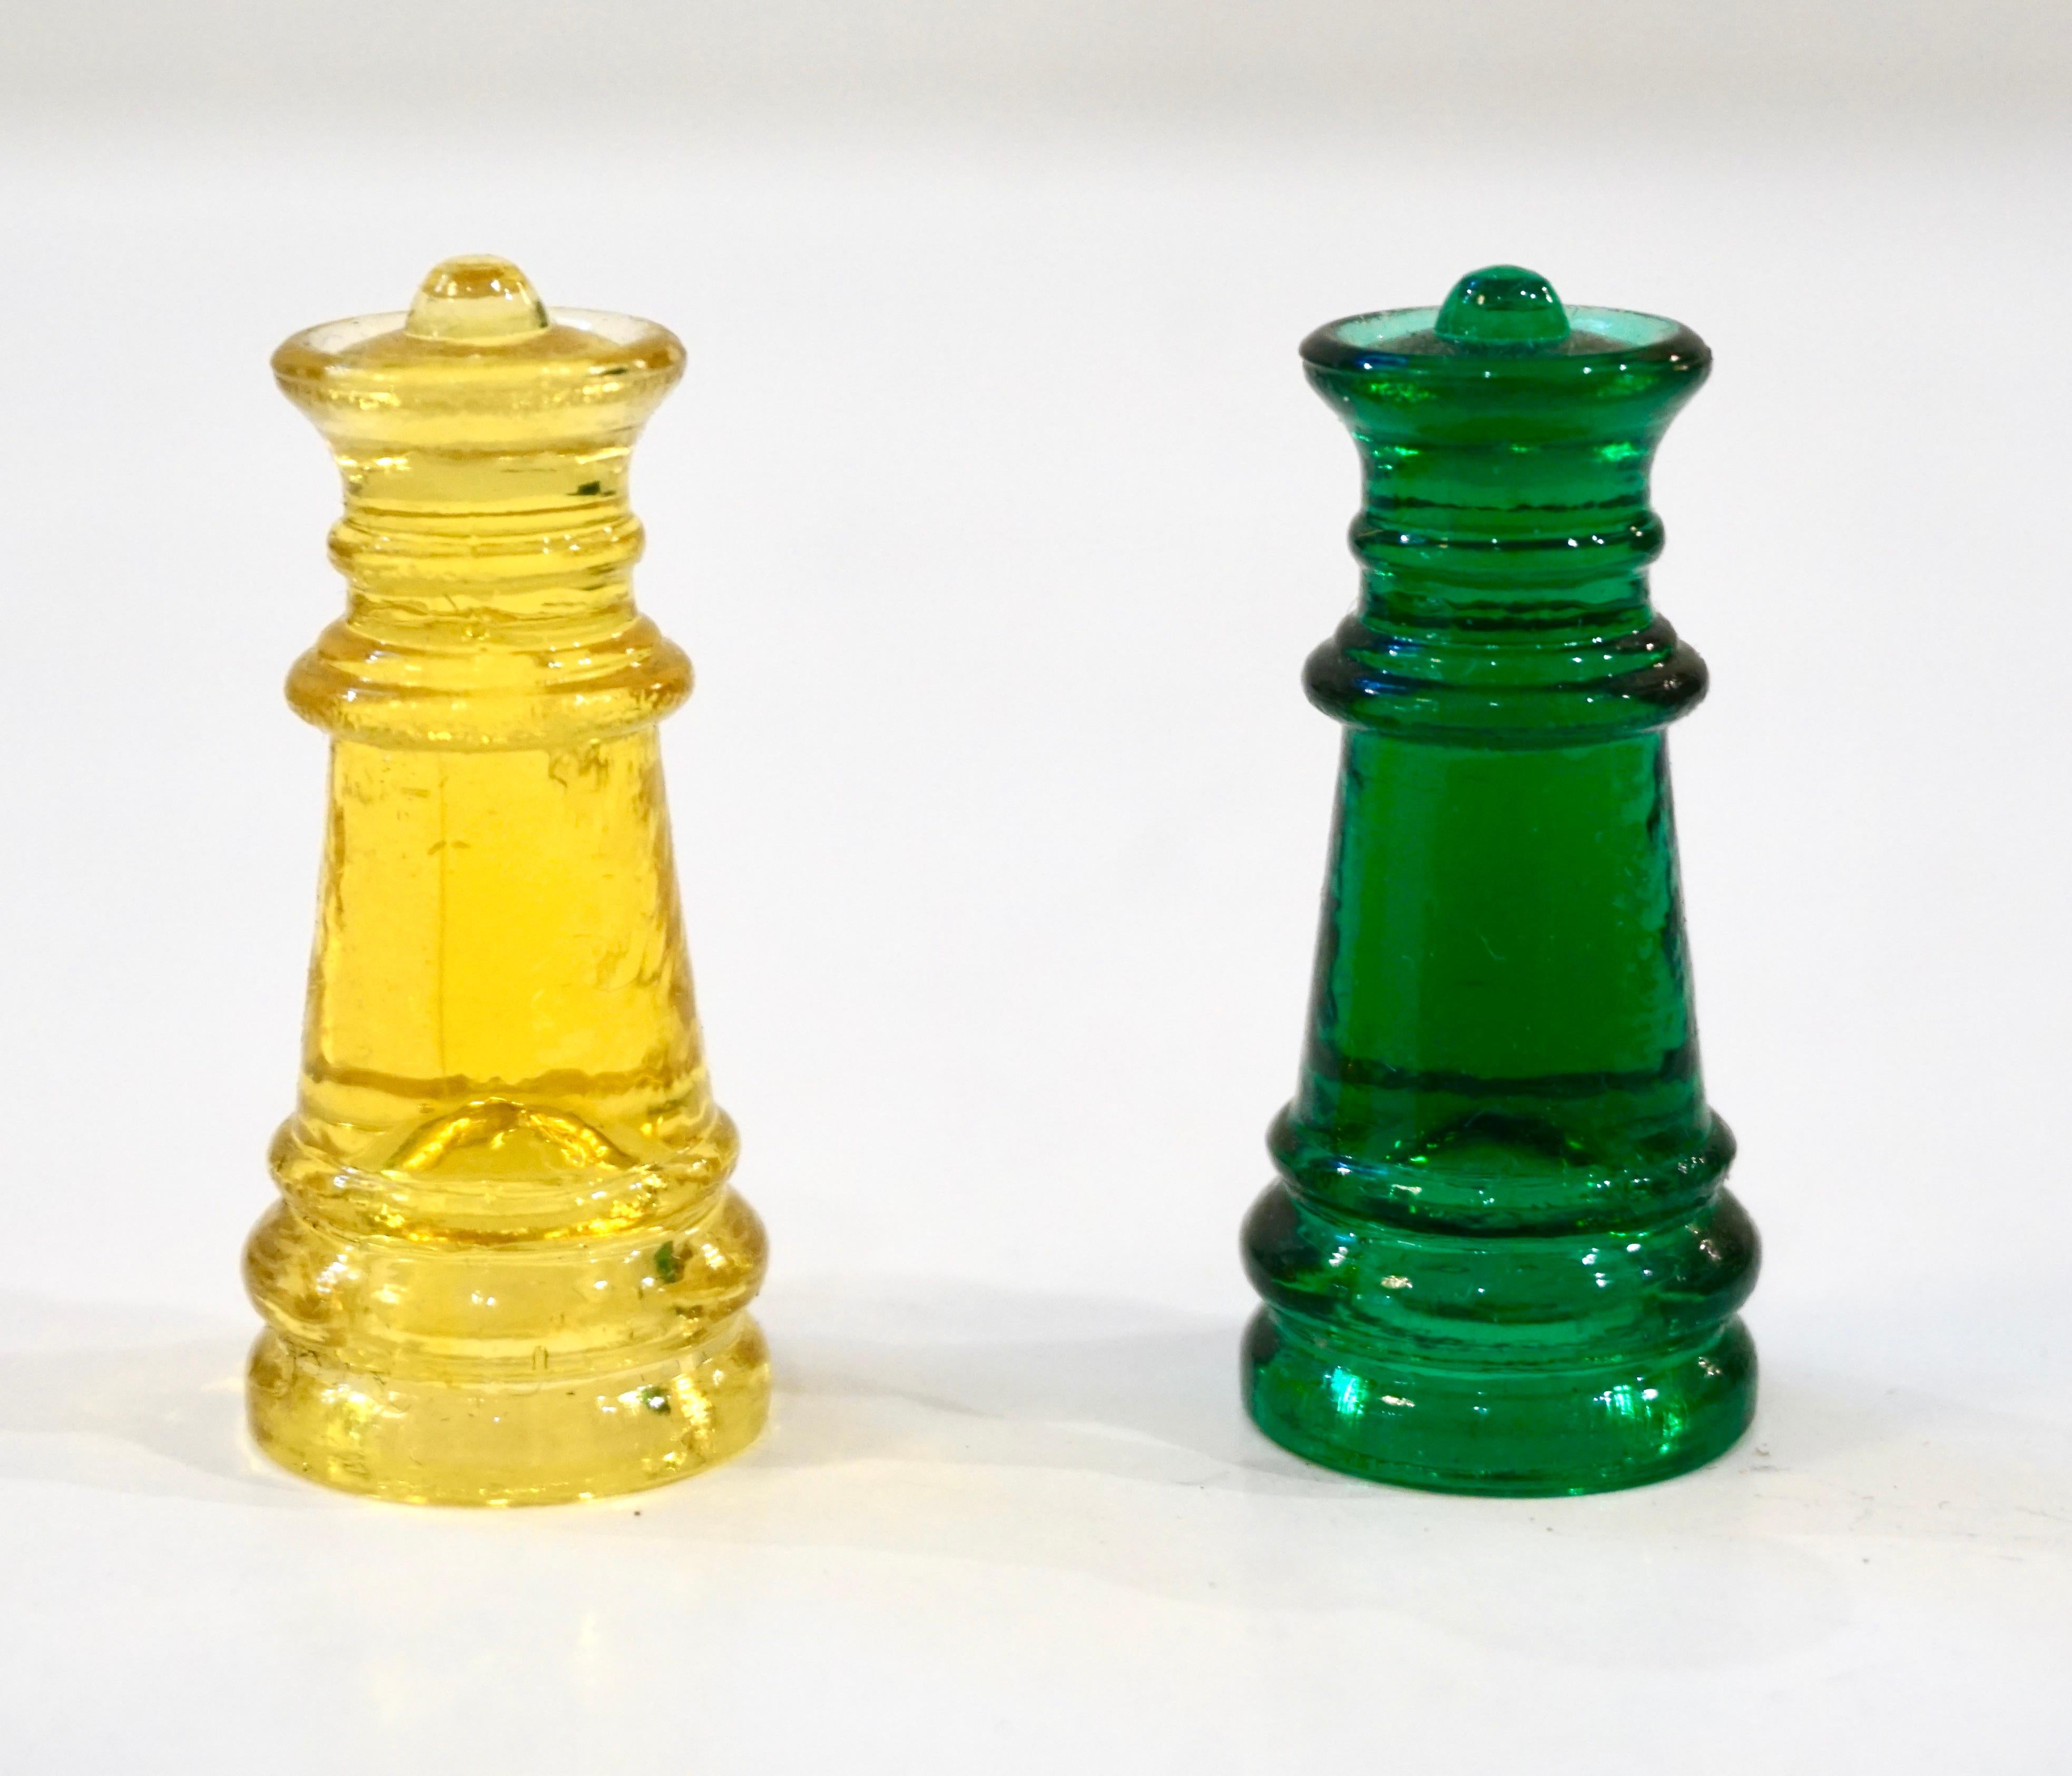 Contemporary Minimalist Green & Yellow Murano Glass Chess Set on Mirrored Board 2